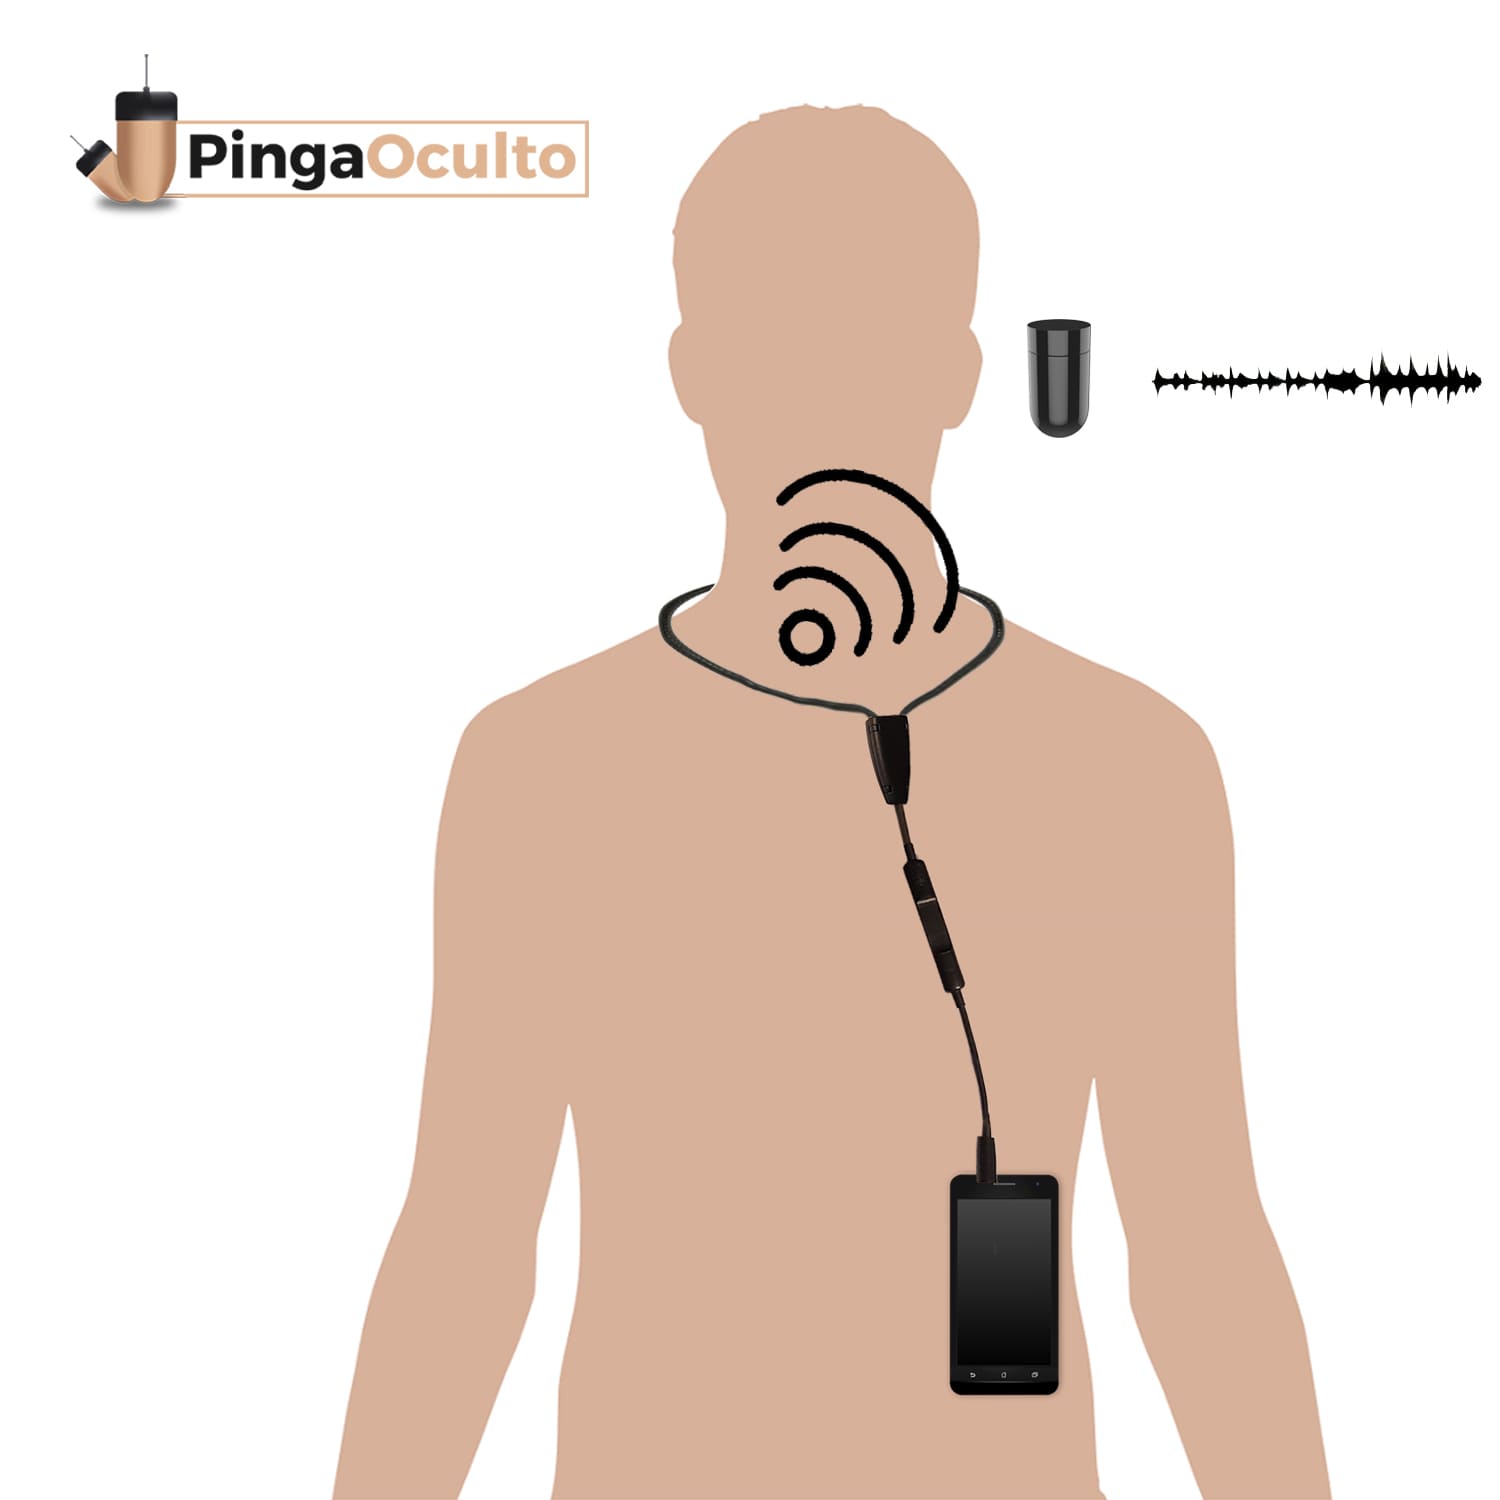 Pinganillo Vip Pro UltraMini + Micrófono Externo - Pinganillo Exámenes